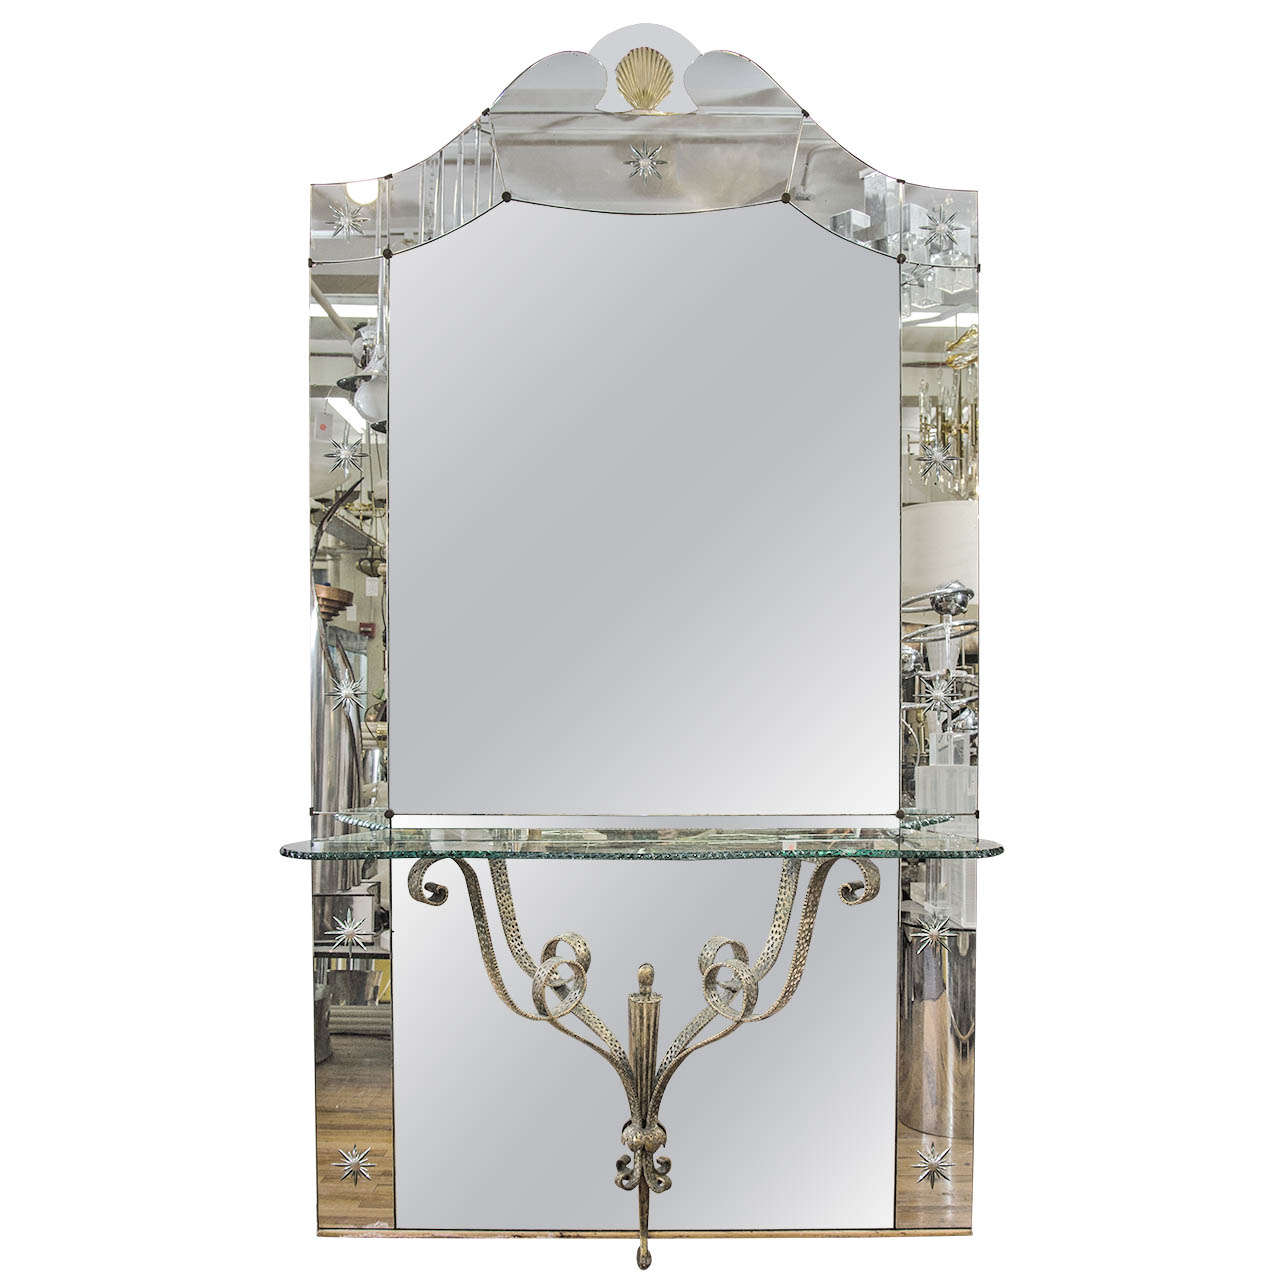  Amazing Italian Hollywood Regency Mirror with Console Shelf For Sale